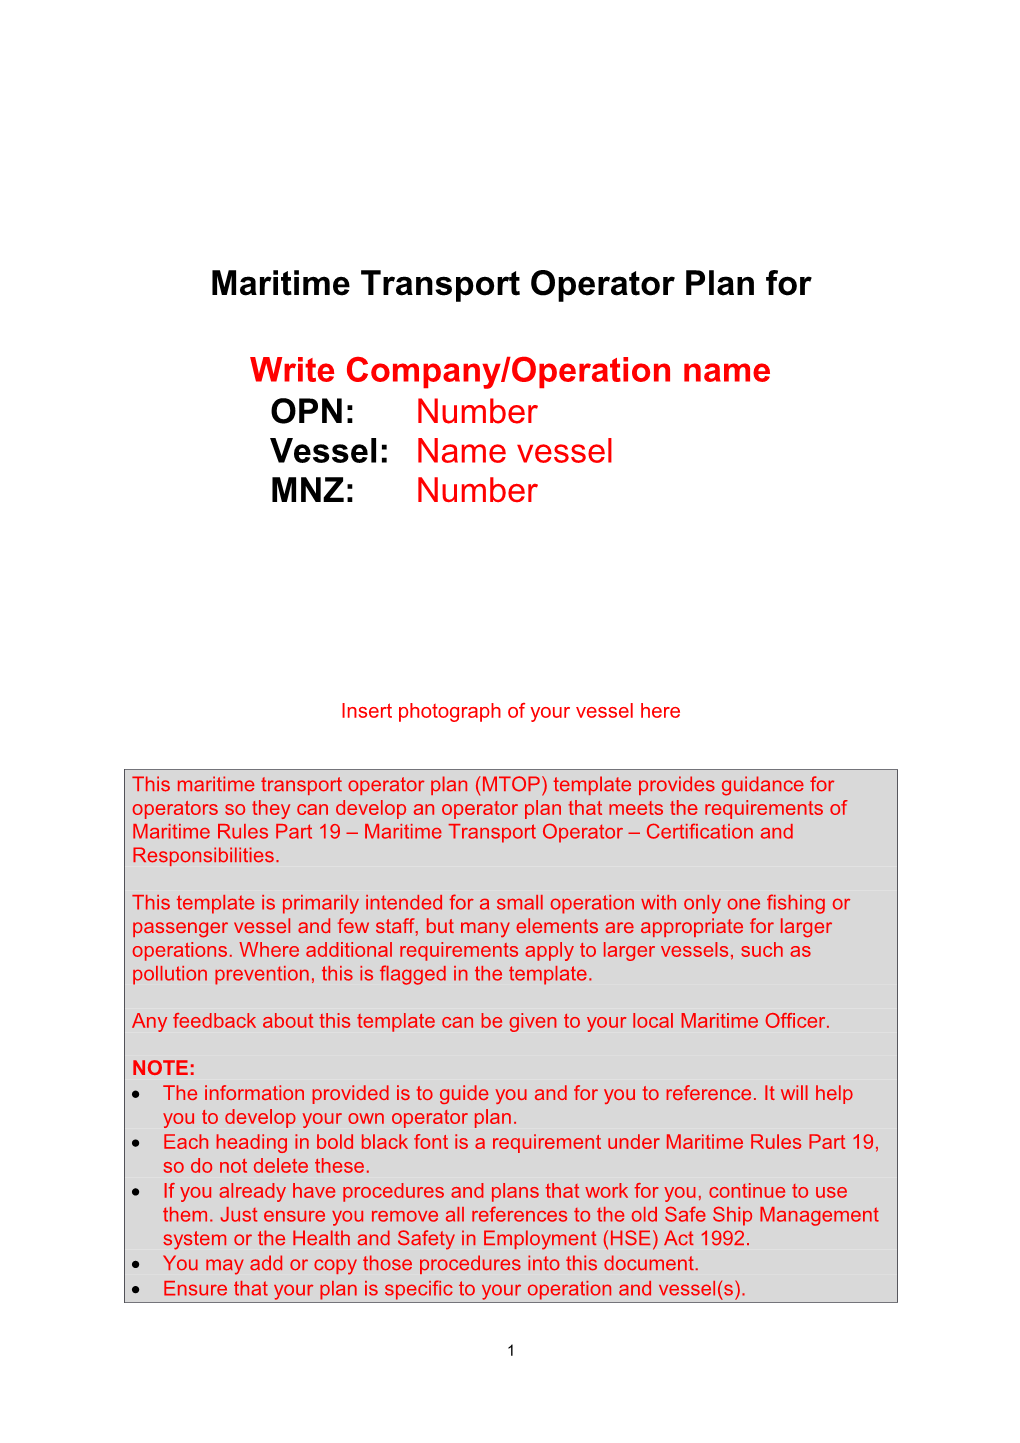 Maritime Transport Operator Plan For